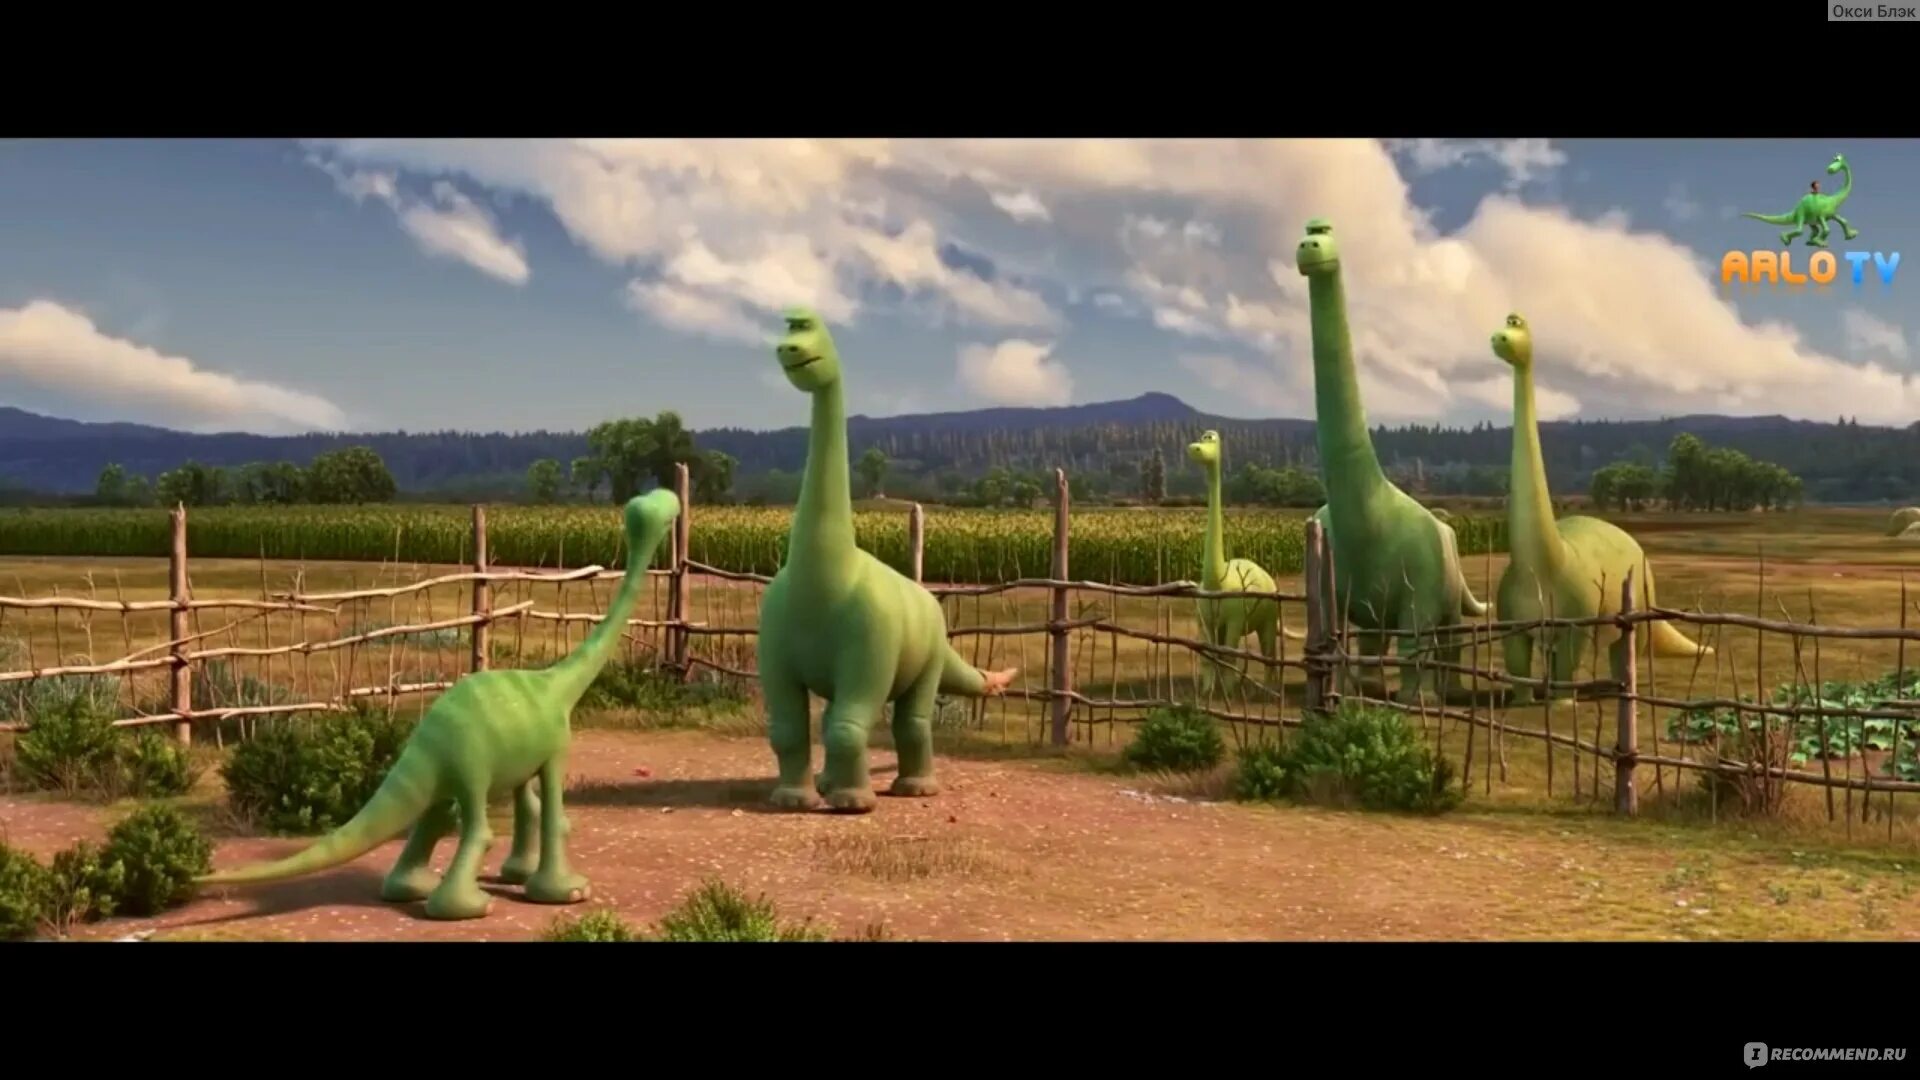 Динозаврами 2015. The good Dinosaur (хороший динозавр) (2015). Динозавр Арло.